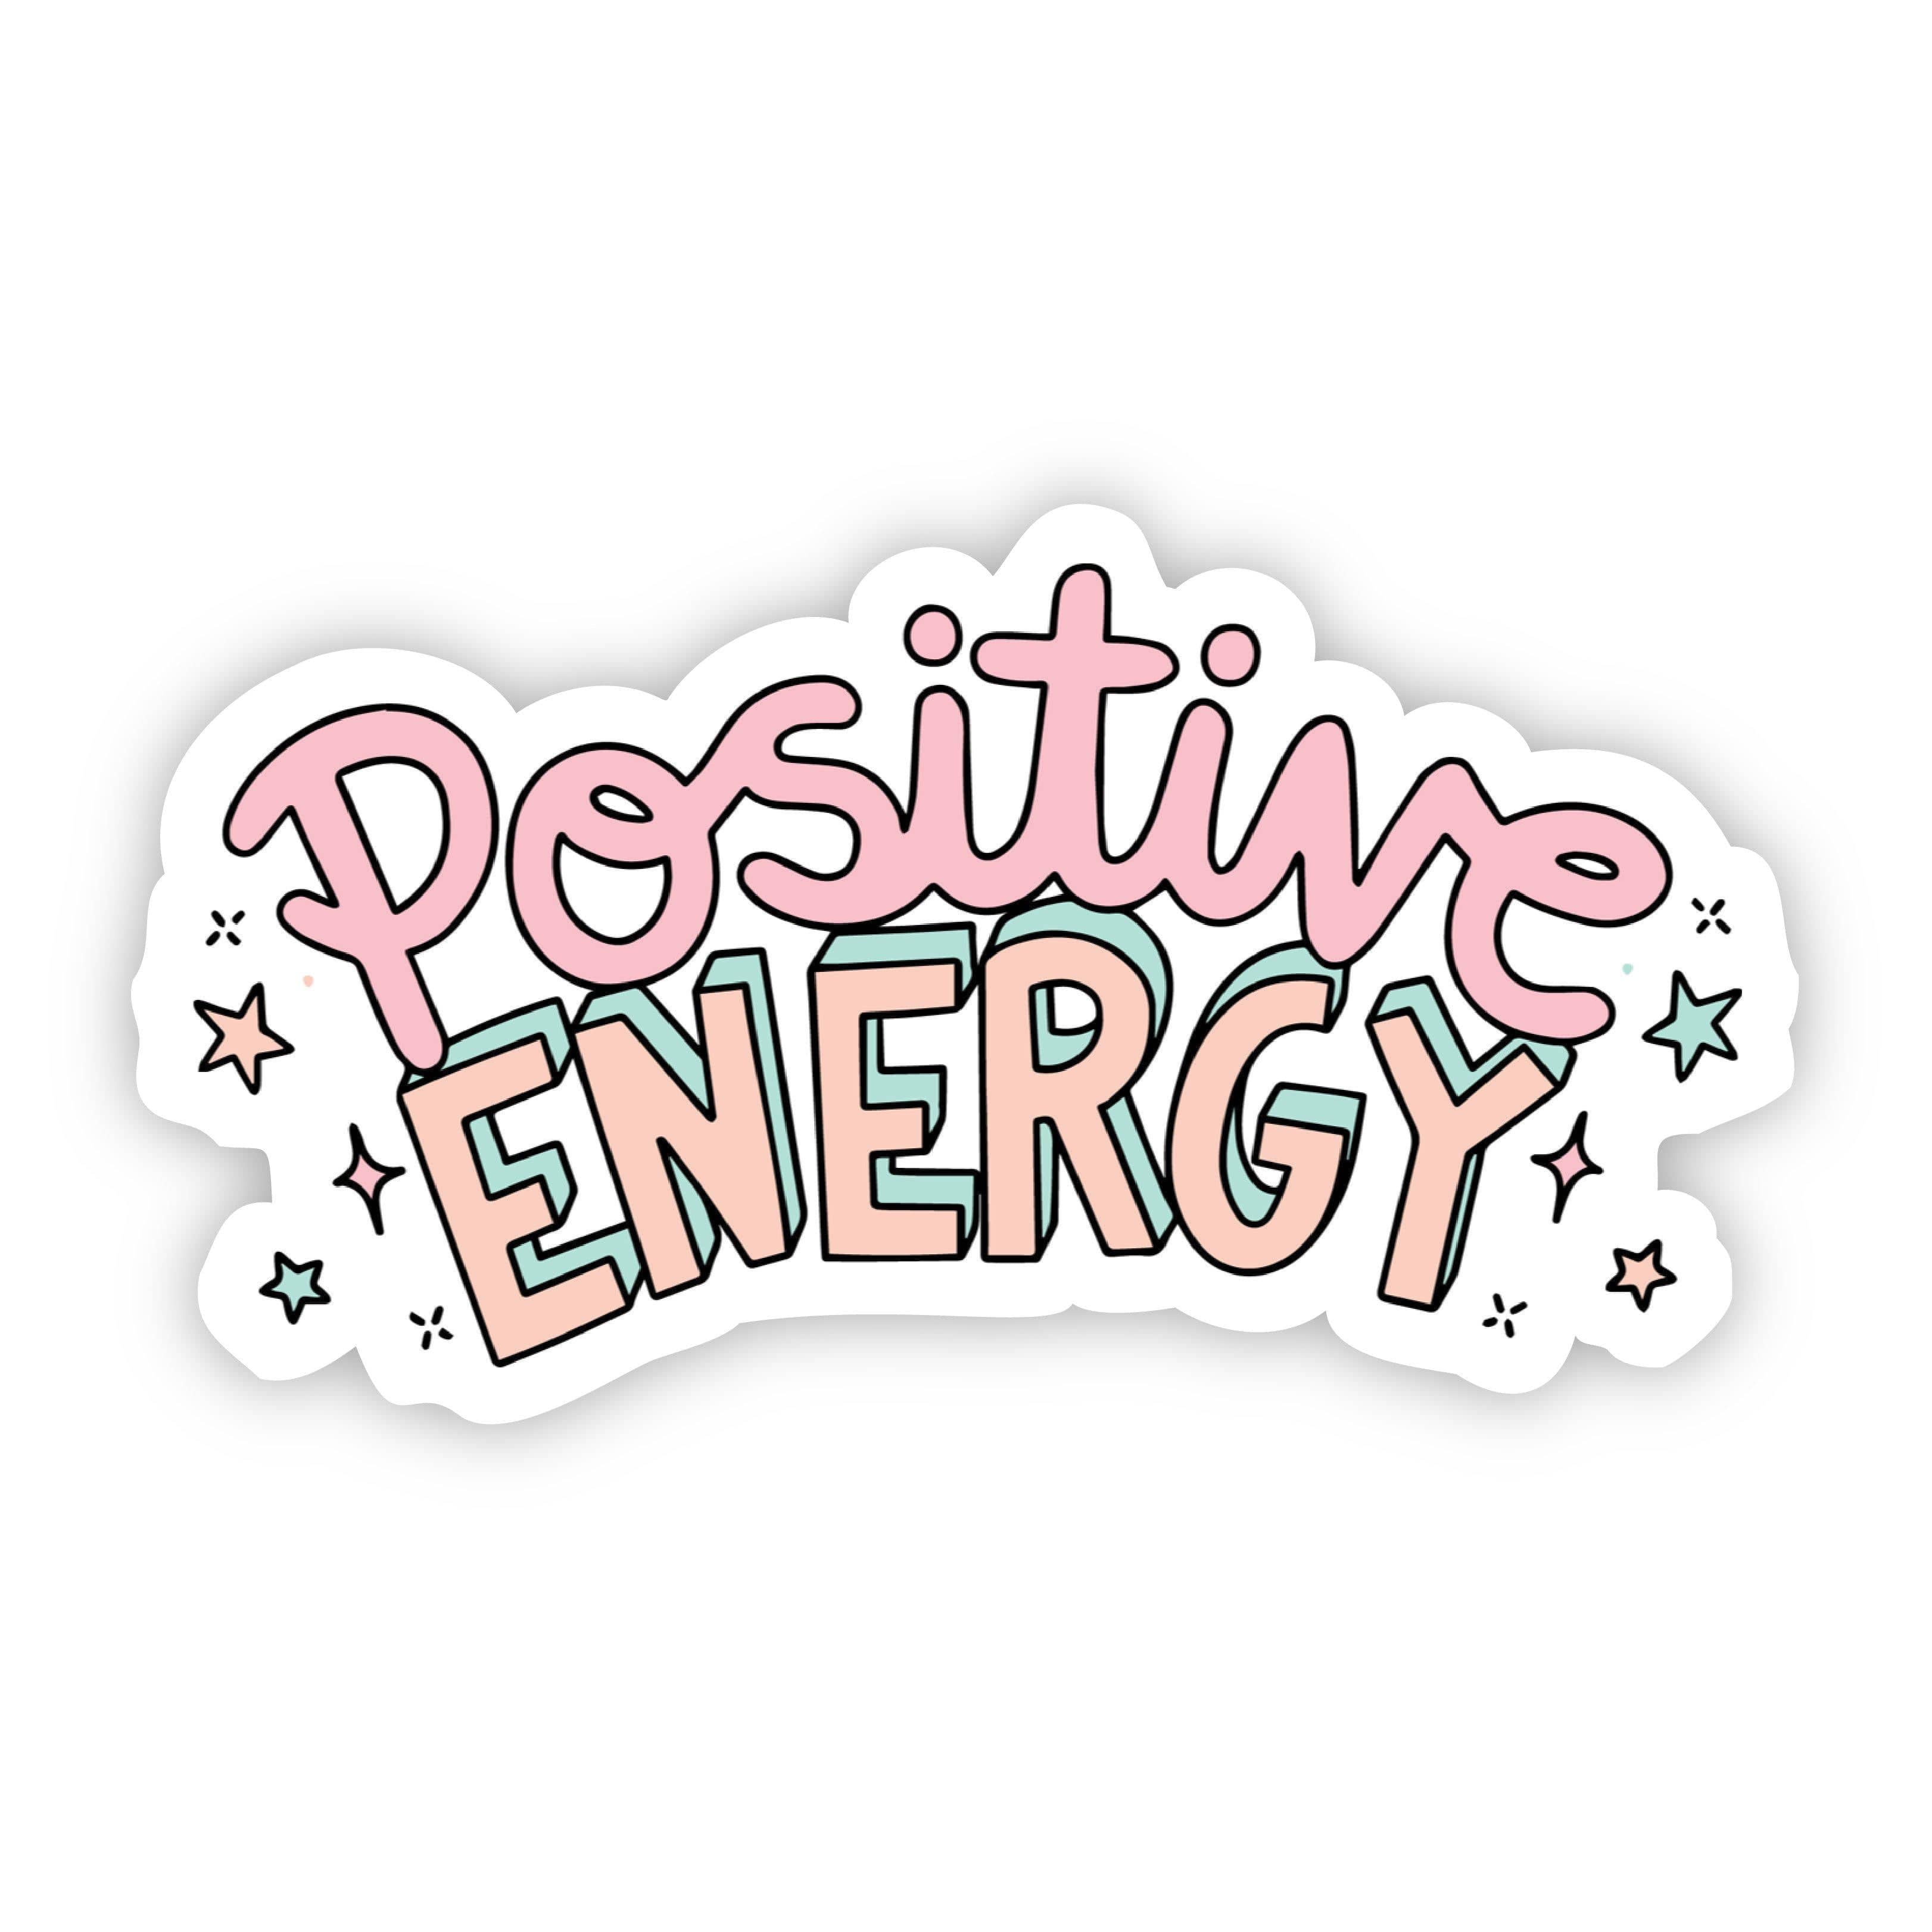 Positive Sticker